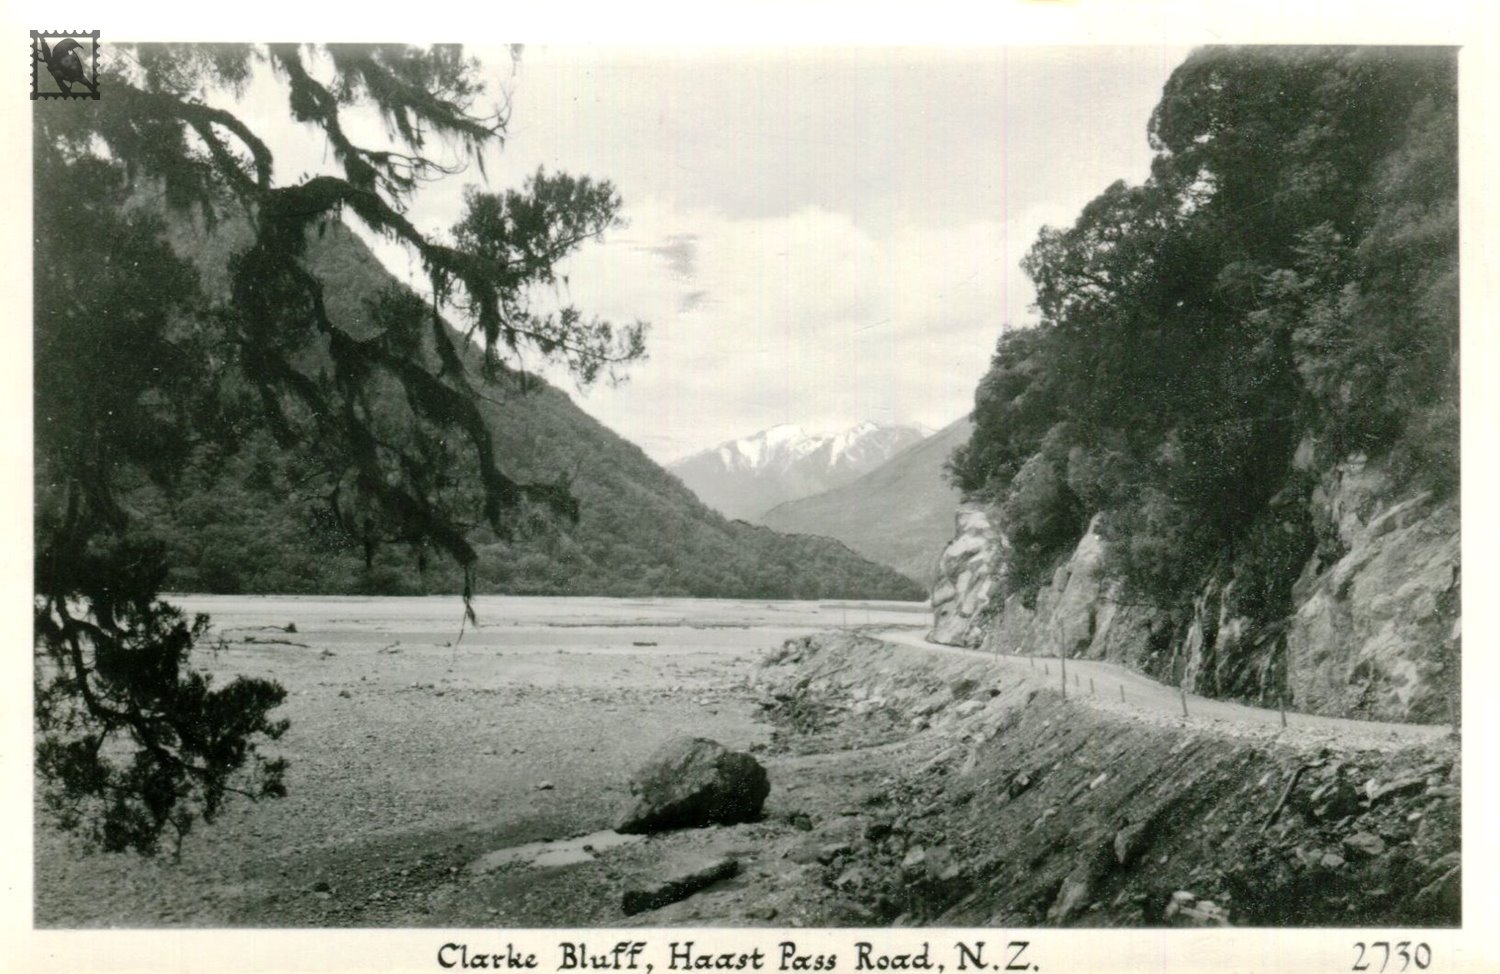 Clarke Bluff - Haast Pass Road